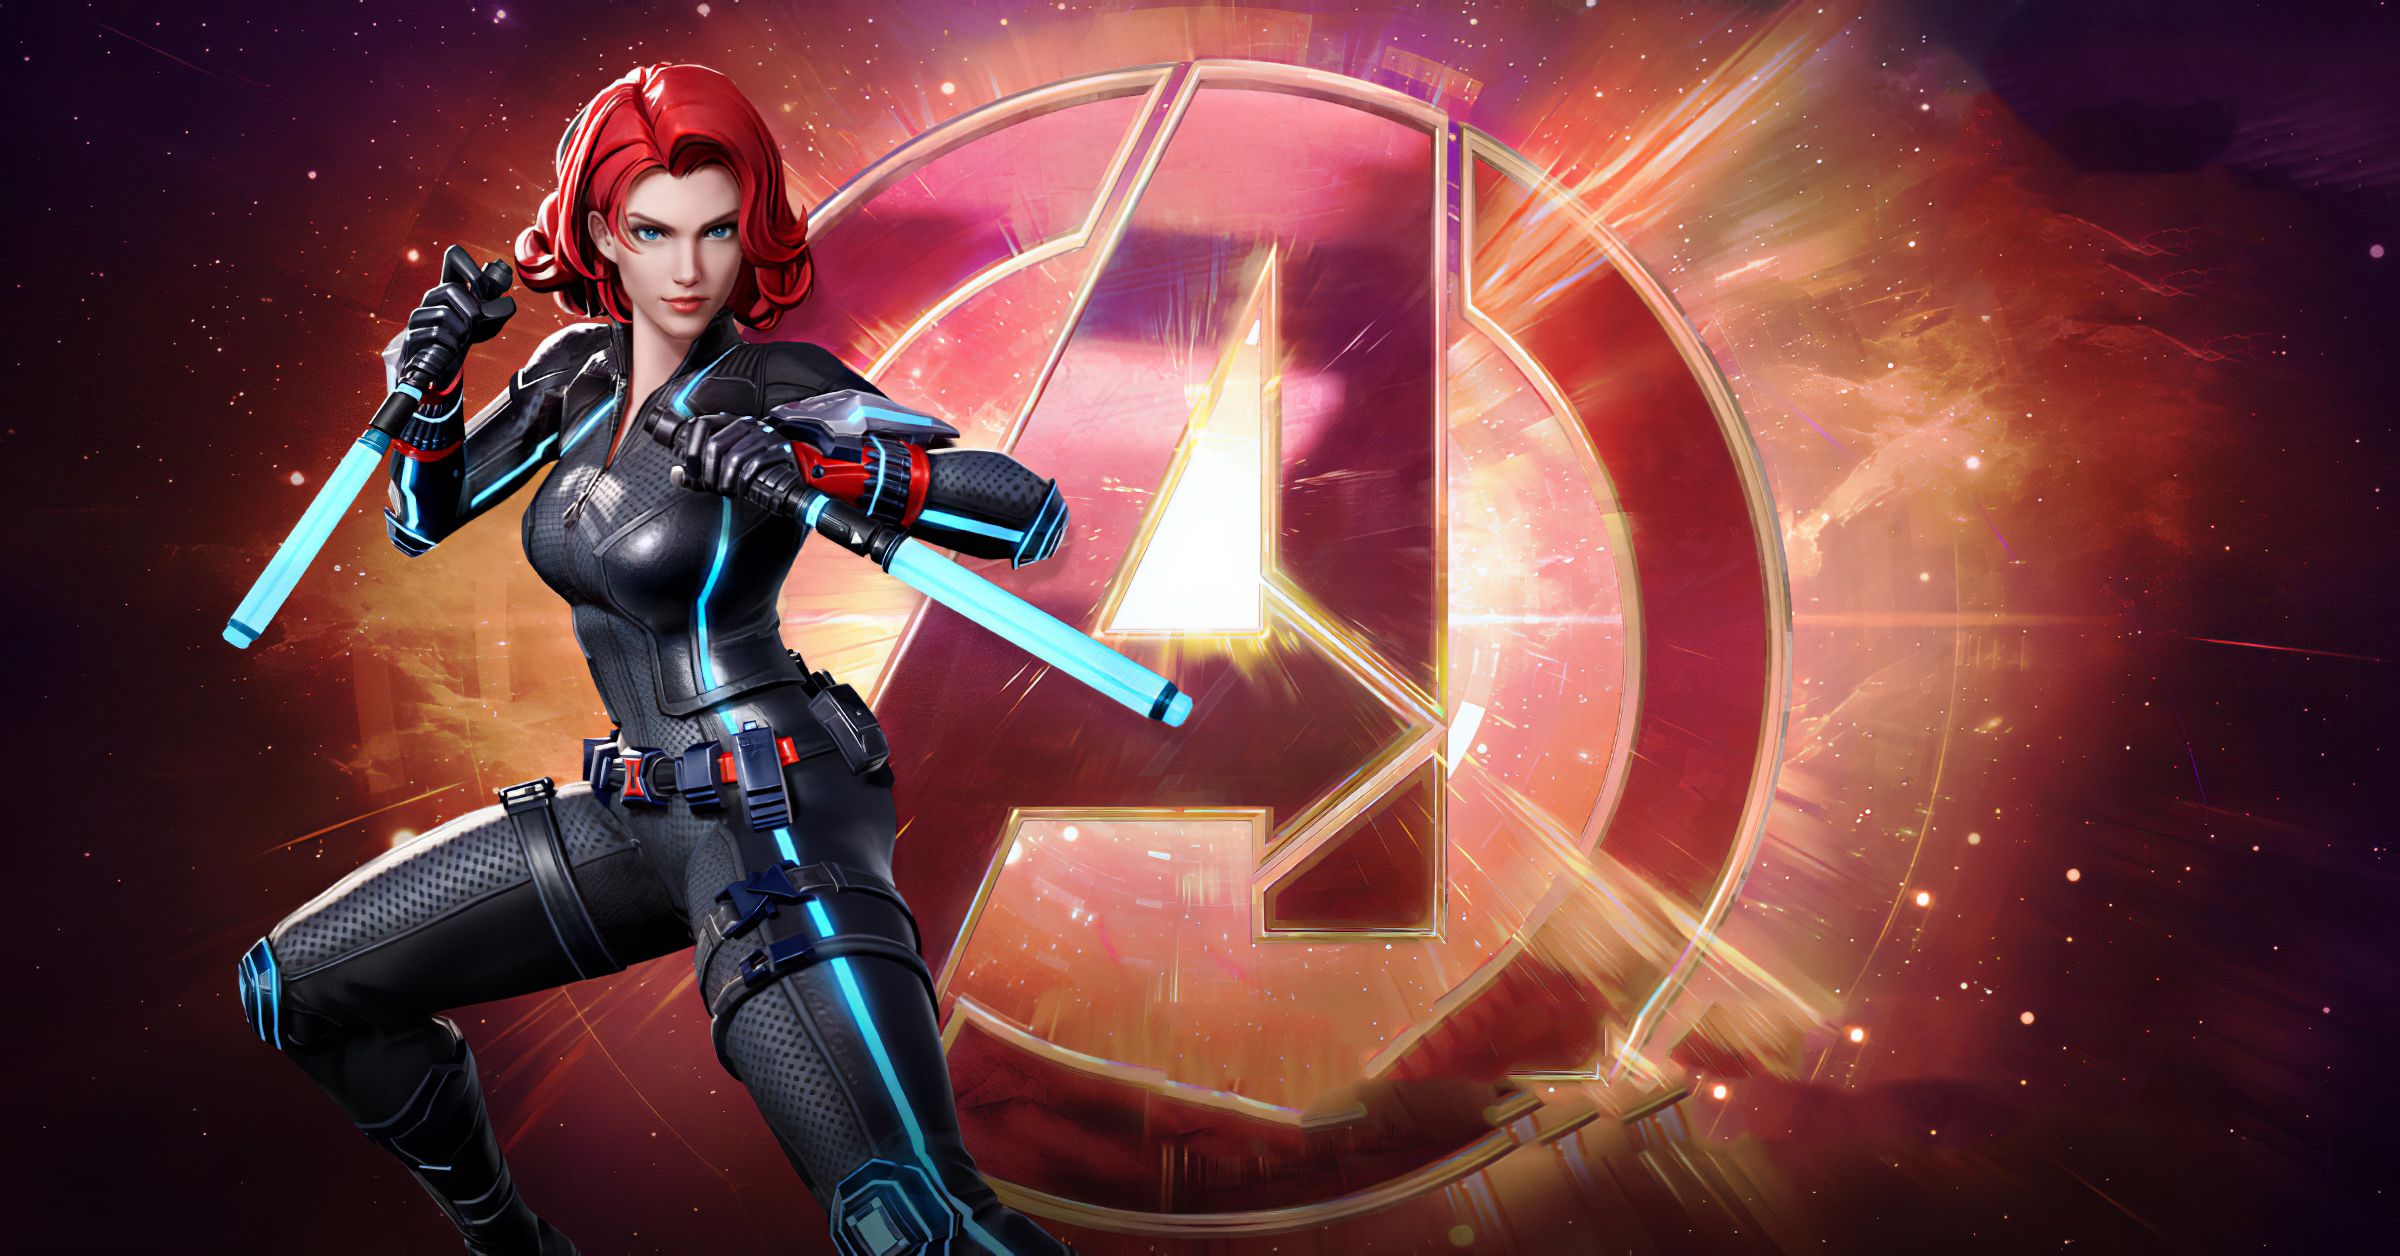 Black Widow MARVEL Super War Wallpaper, HD Games 4K Wallpaper, Image, Photo and Background